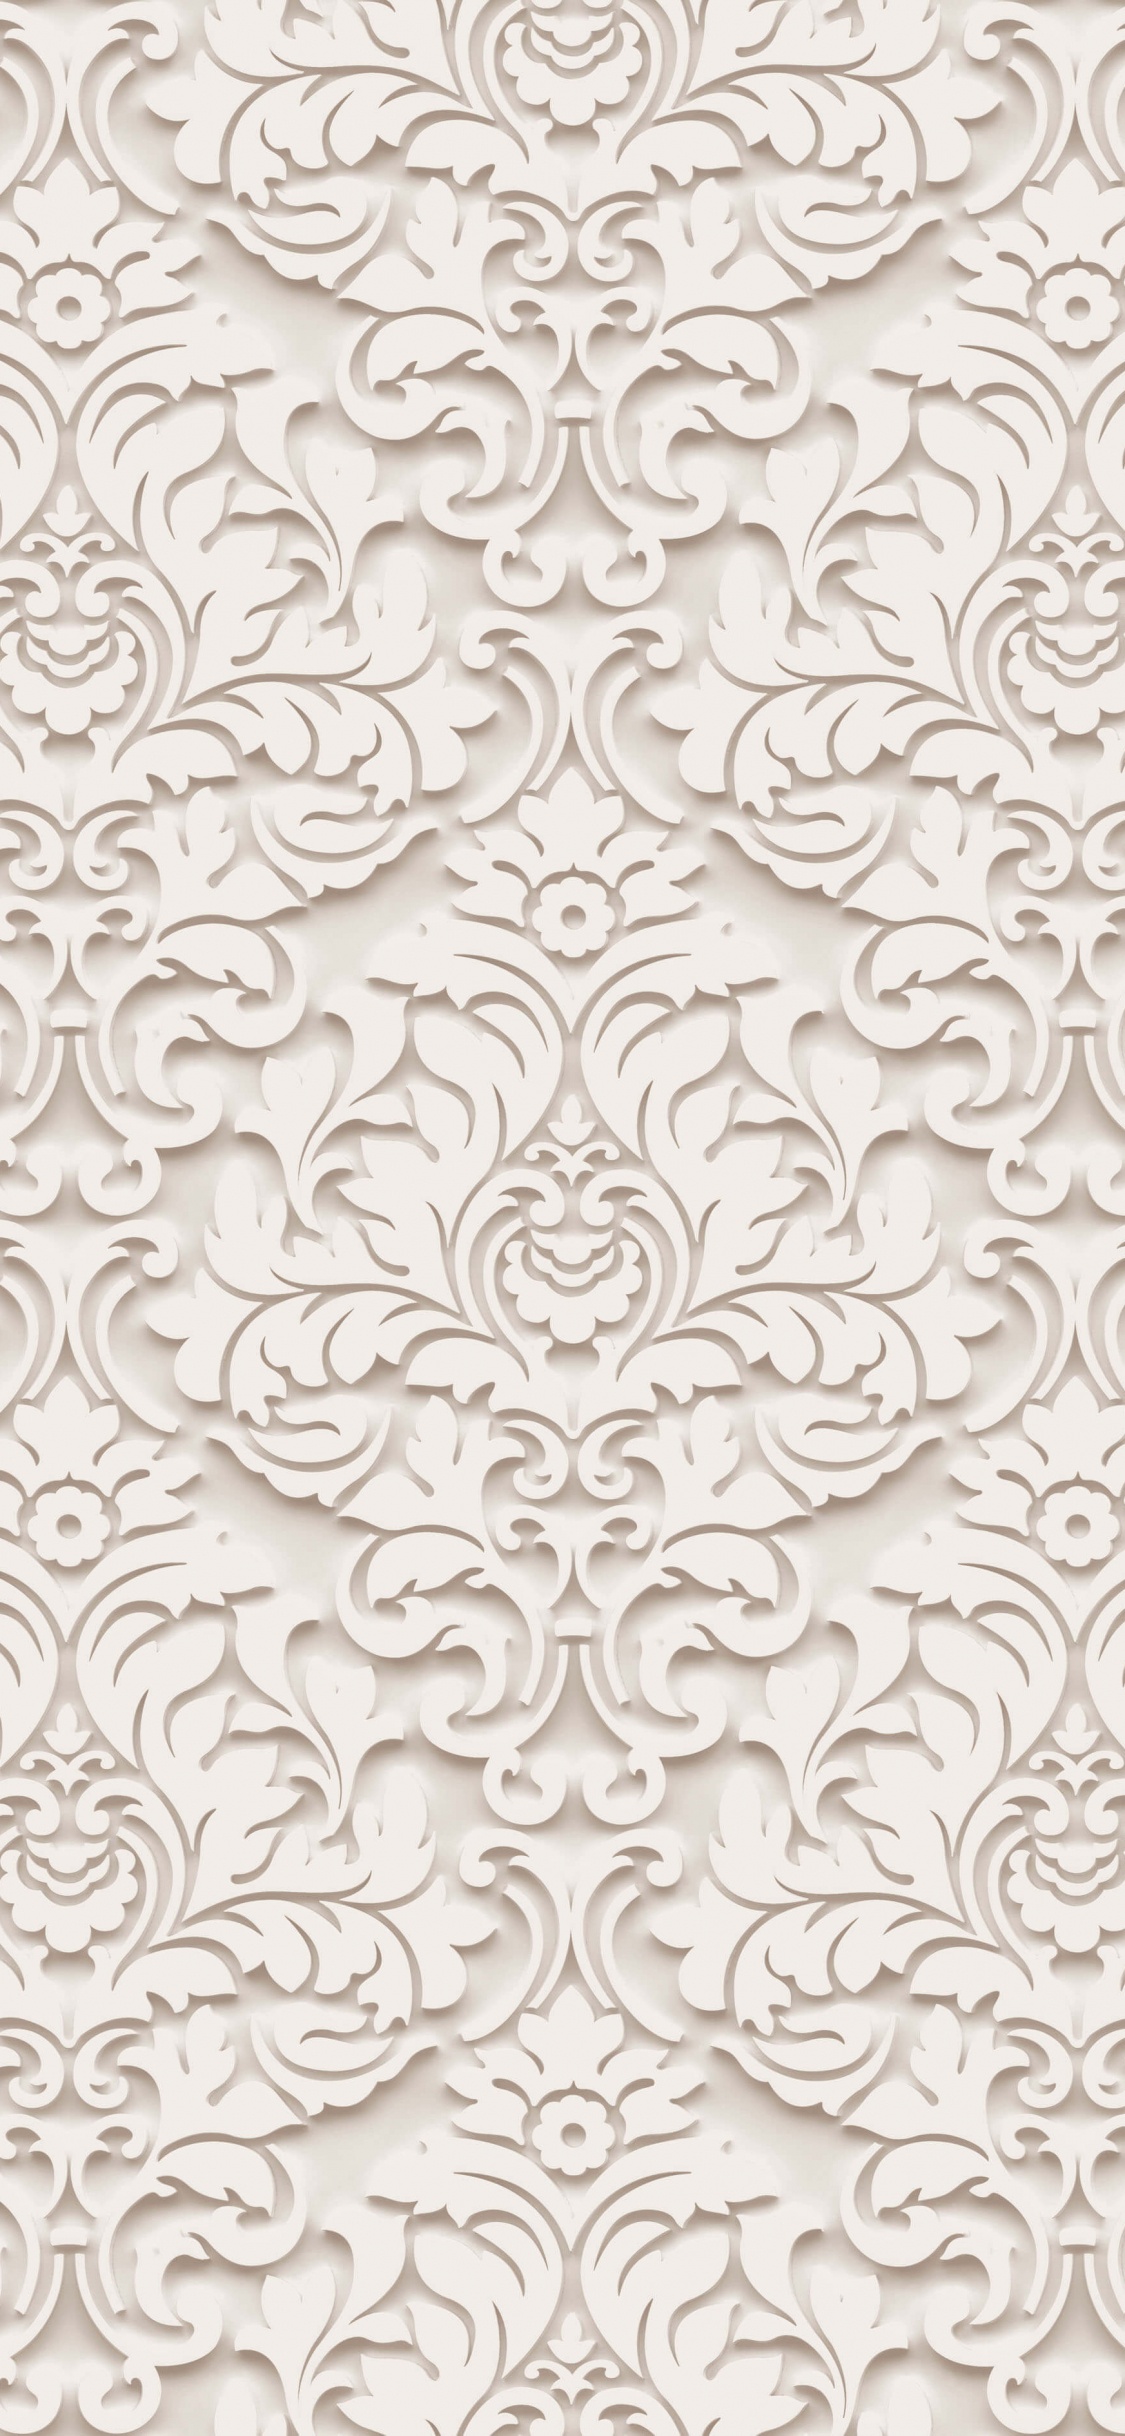 Textil Floral Blanco y Negro. Wallpaper in 1125x2436 Resolution